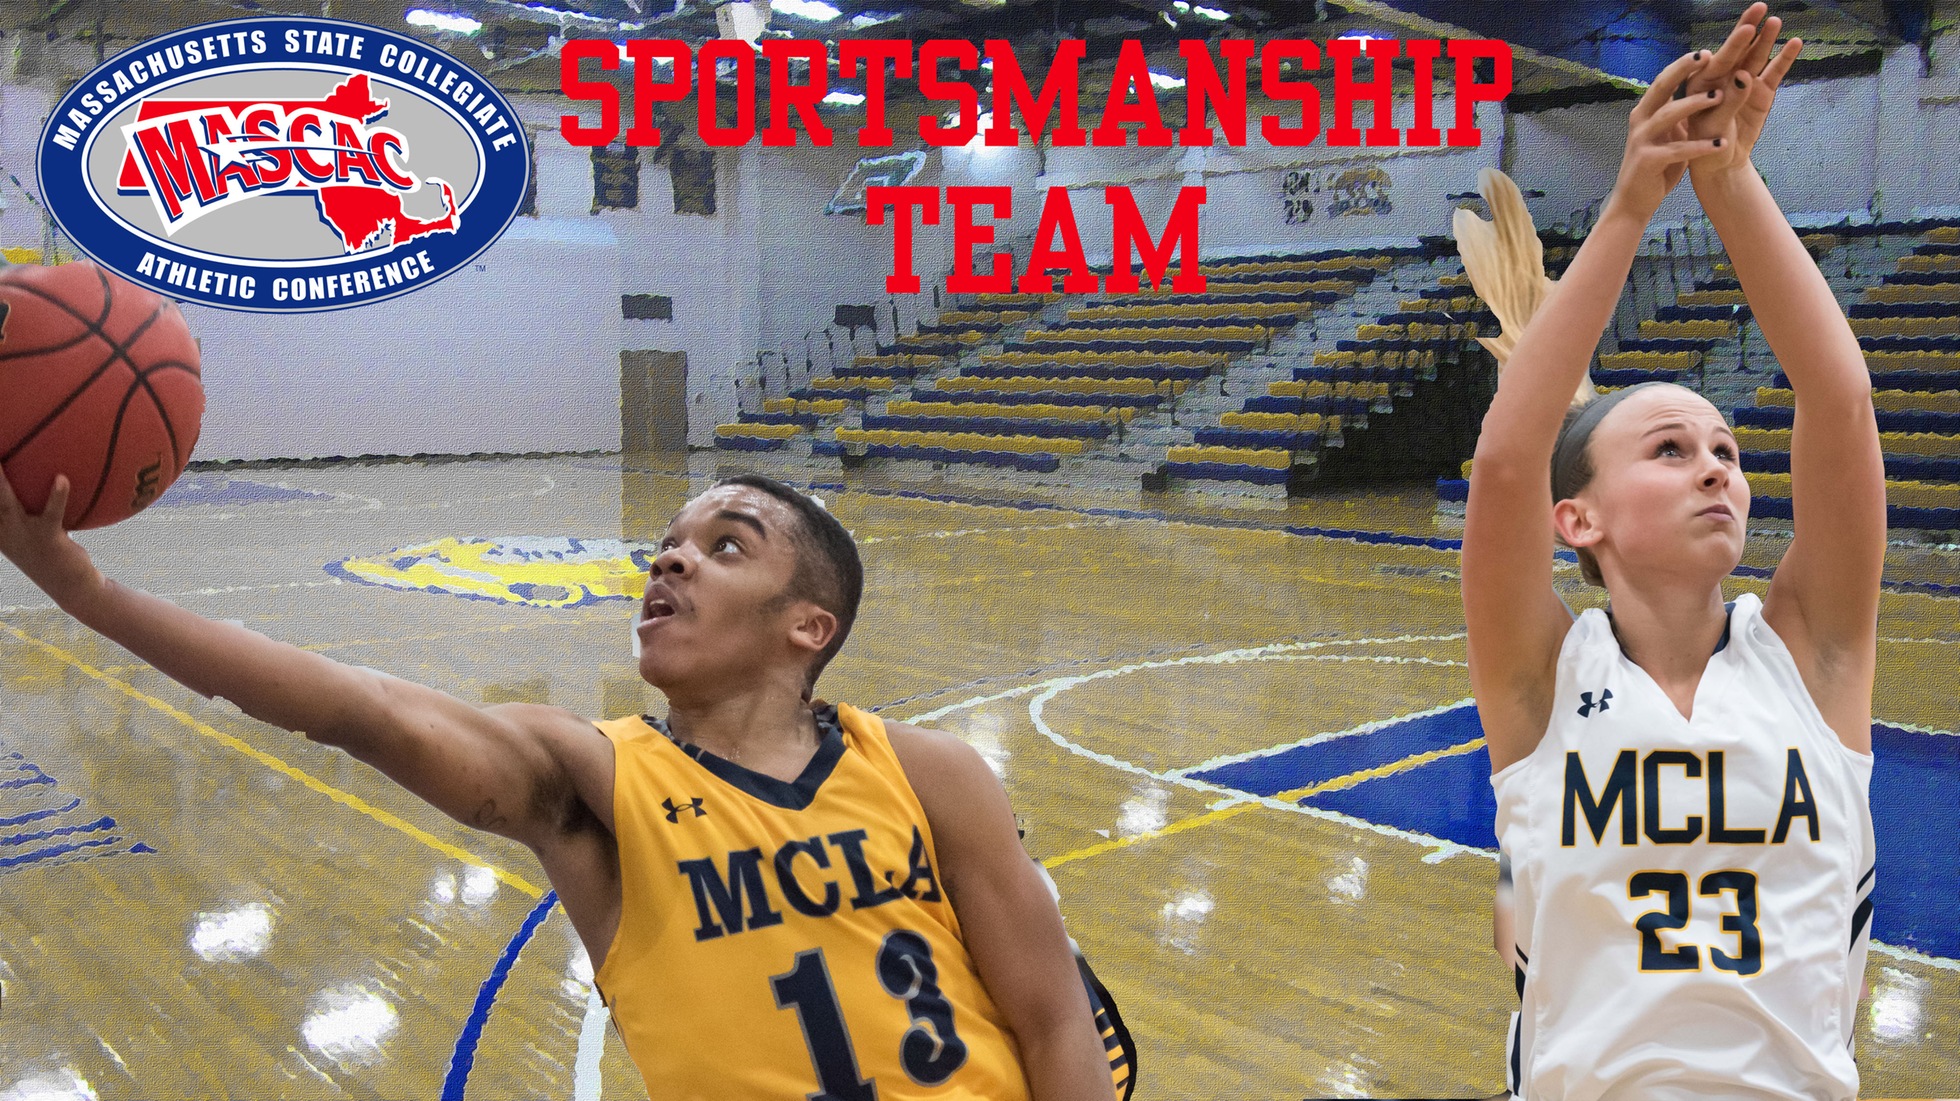 Moulton, McKay named to MASCAC Sportsmanship teams